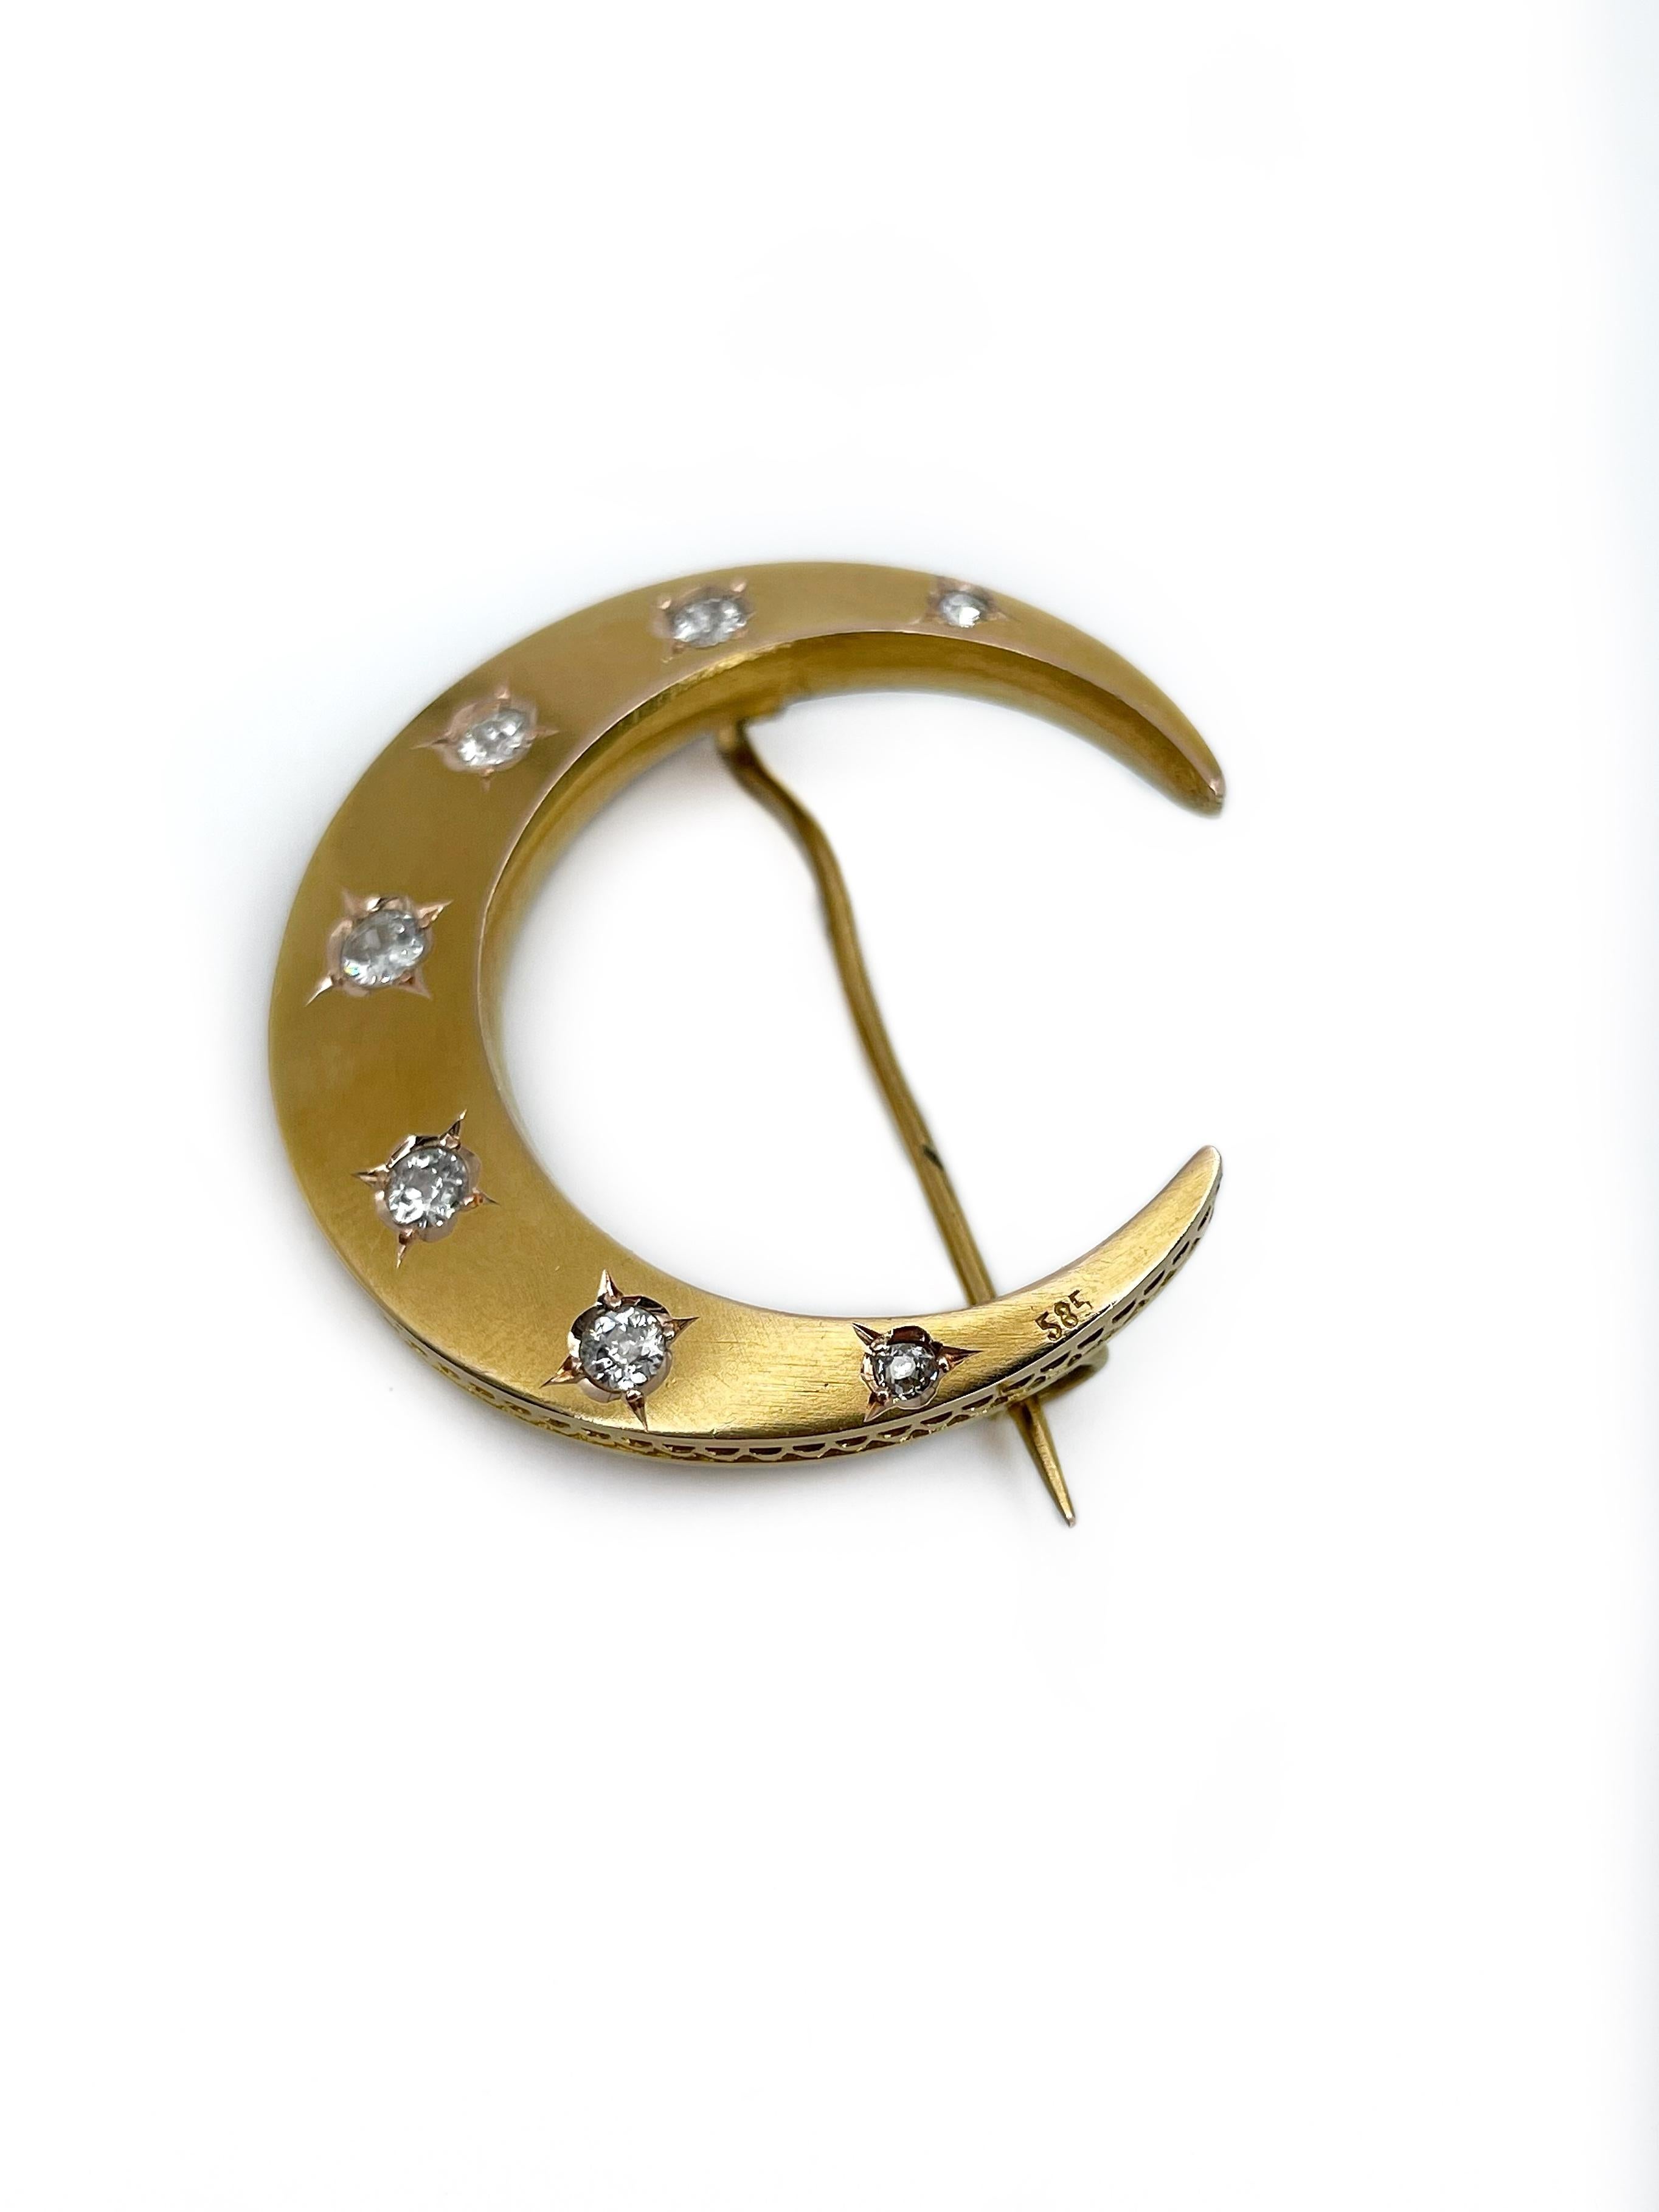 Women's or Men's Antique Victorian 14 Karat Yellow Gold Diamond Crescent Moon Pin Brooch